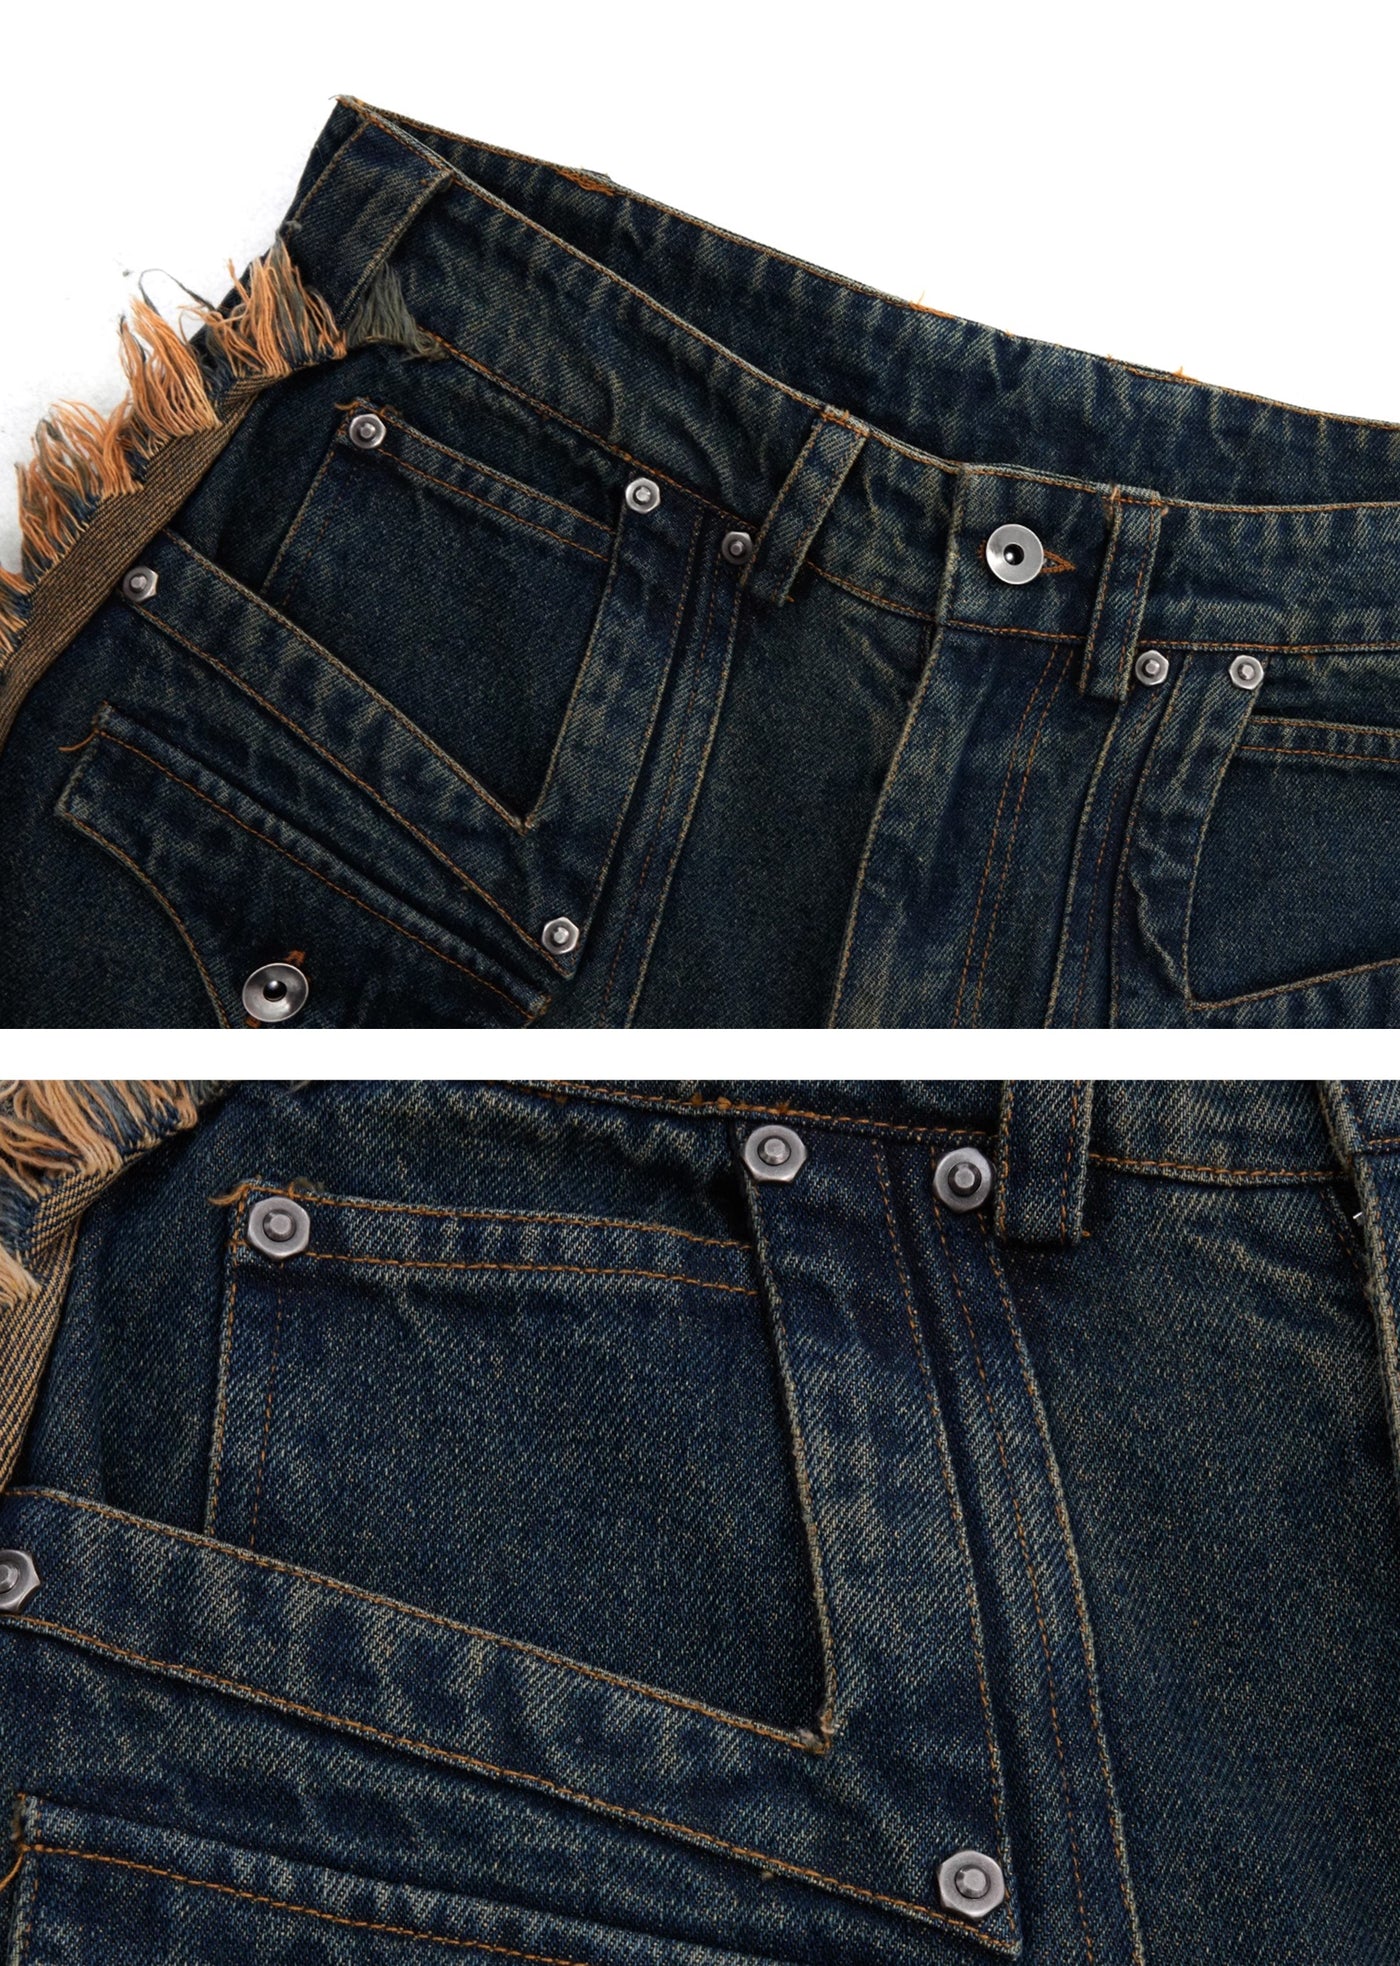 【Culture E】Full fringe distressed blue gimmick denim pants  CE0135